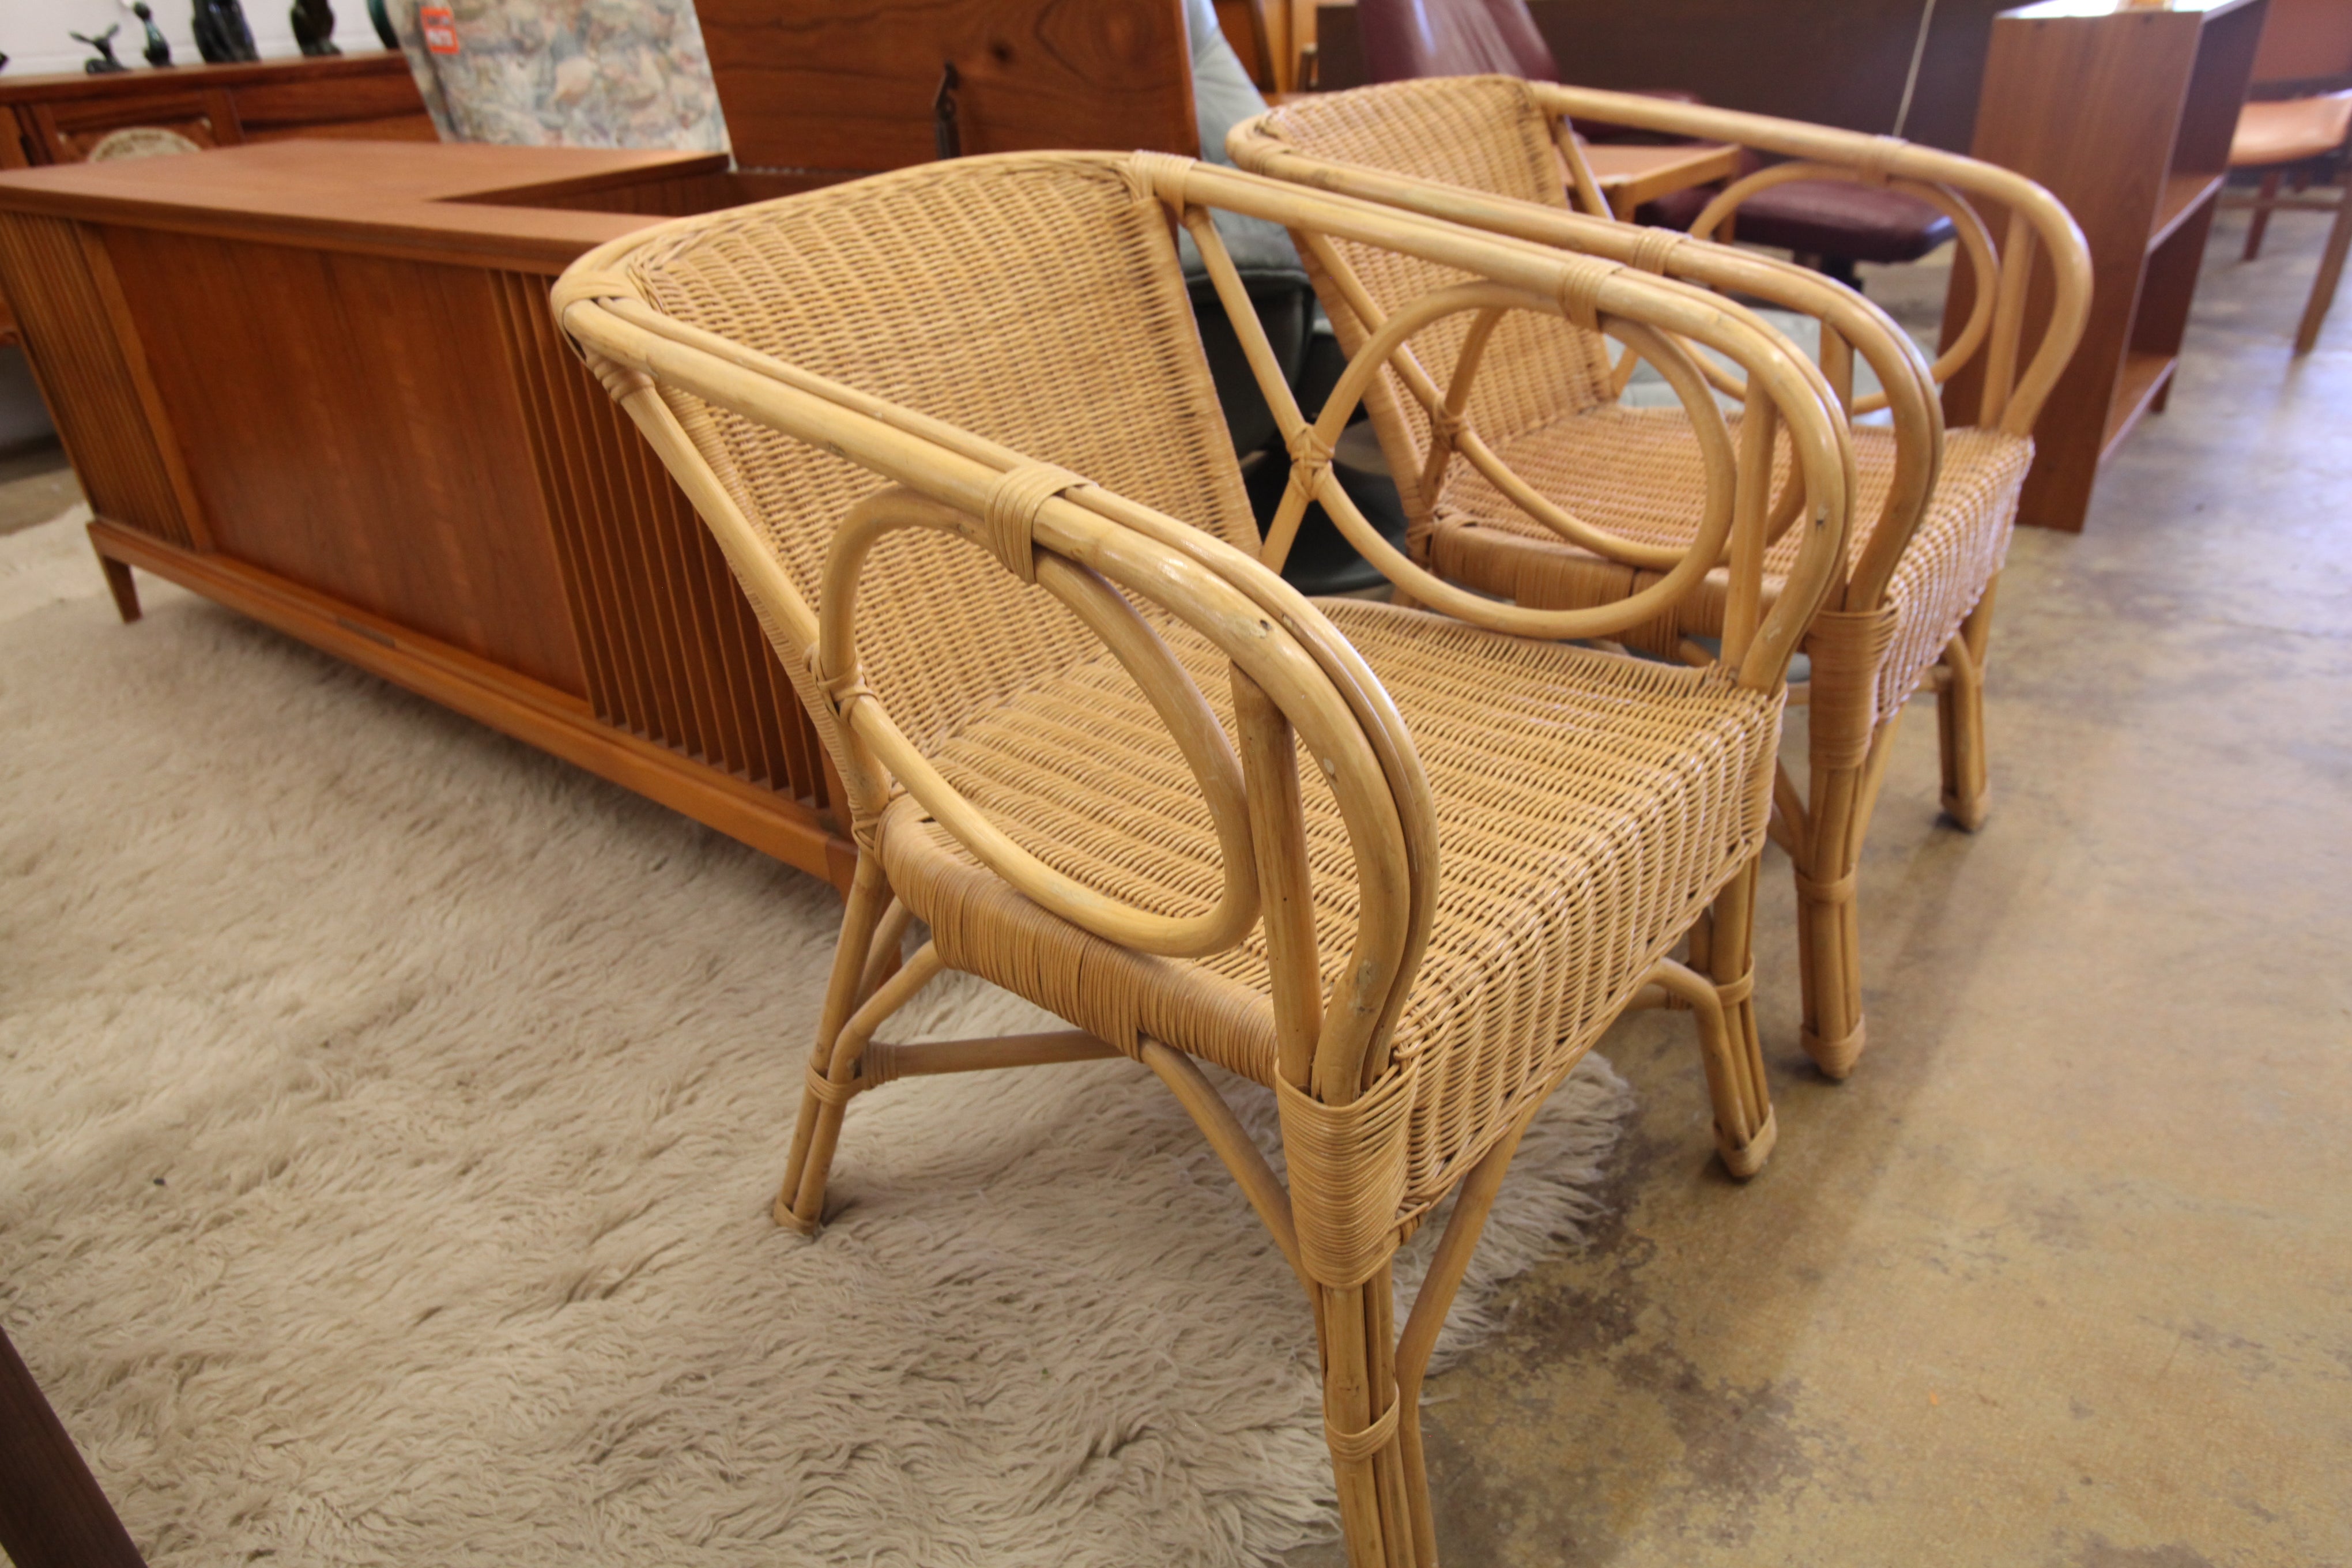 Set of 2 Vintage Ratan Chairs (22"W x 25"D x 28.5"H)